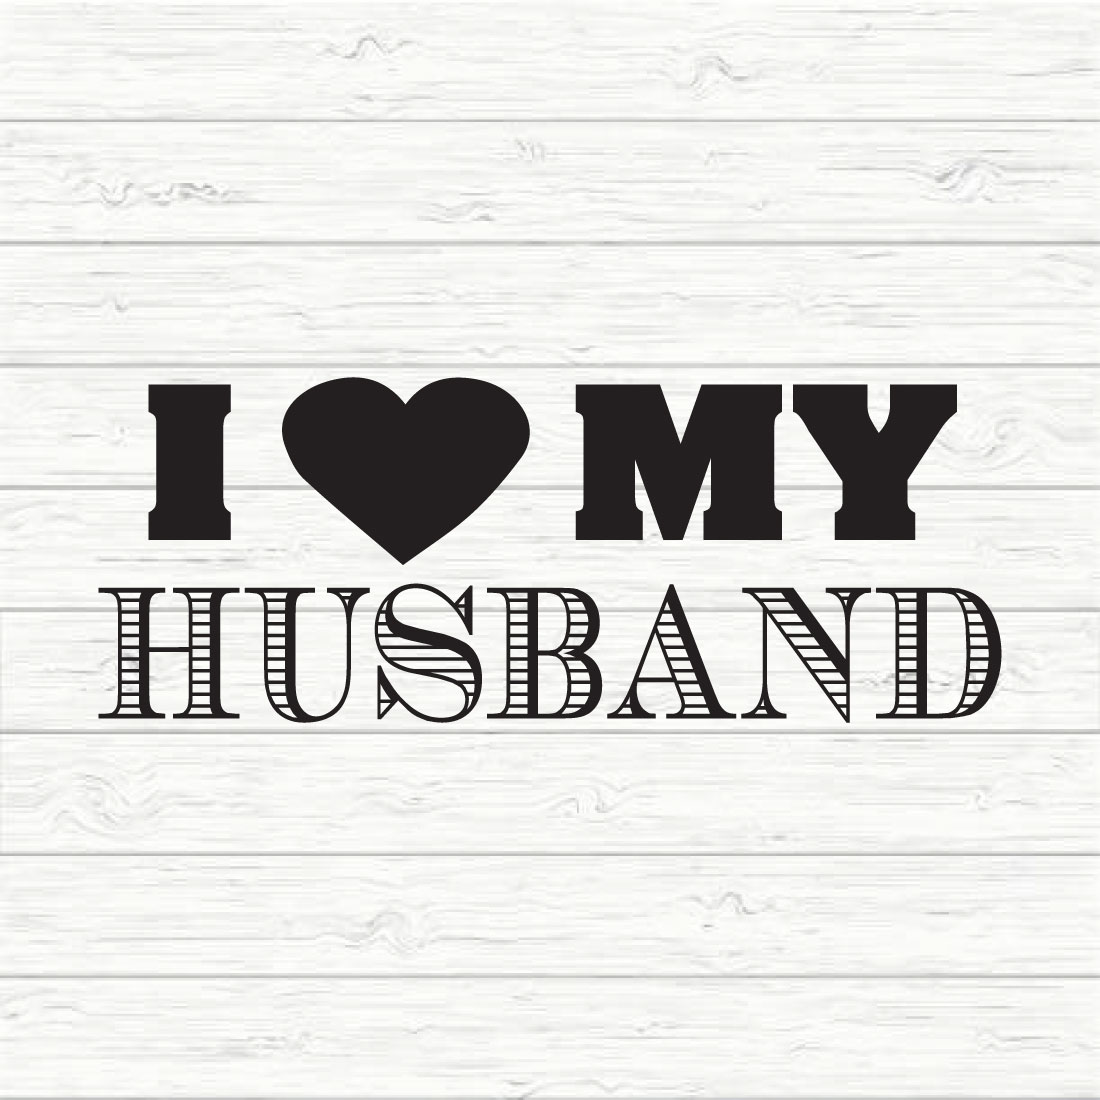 I Love My Husband Svg cover image.